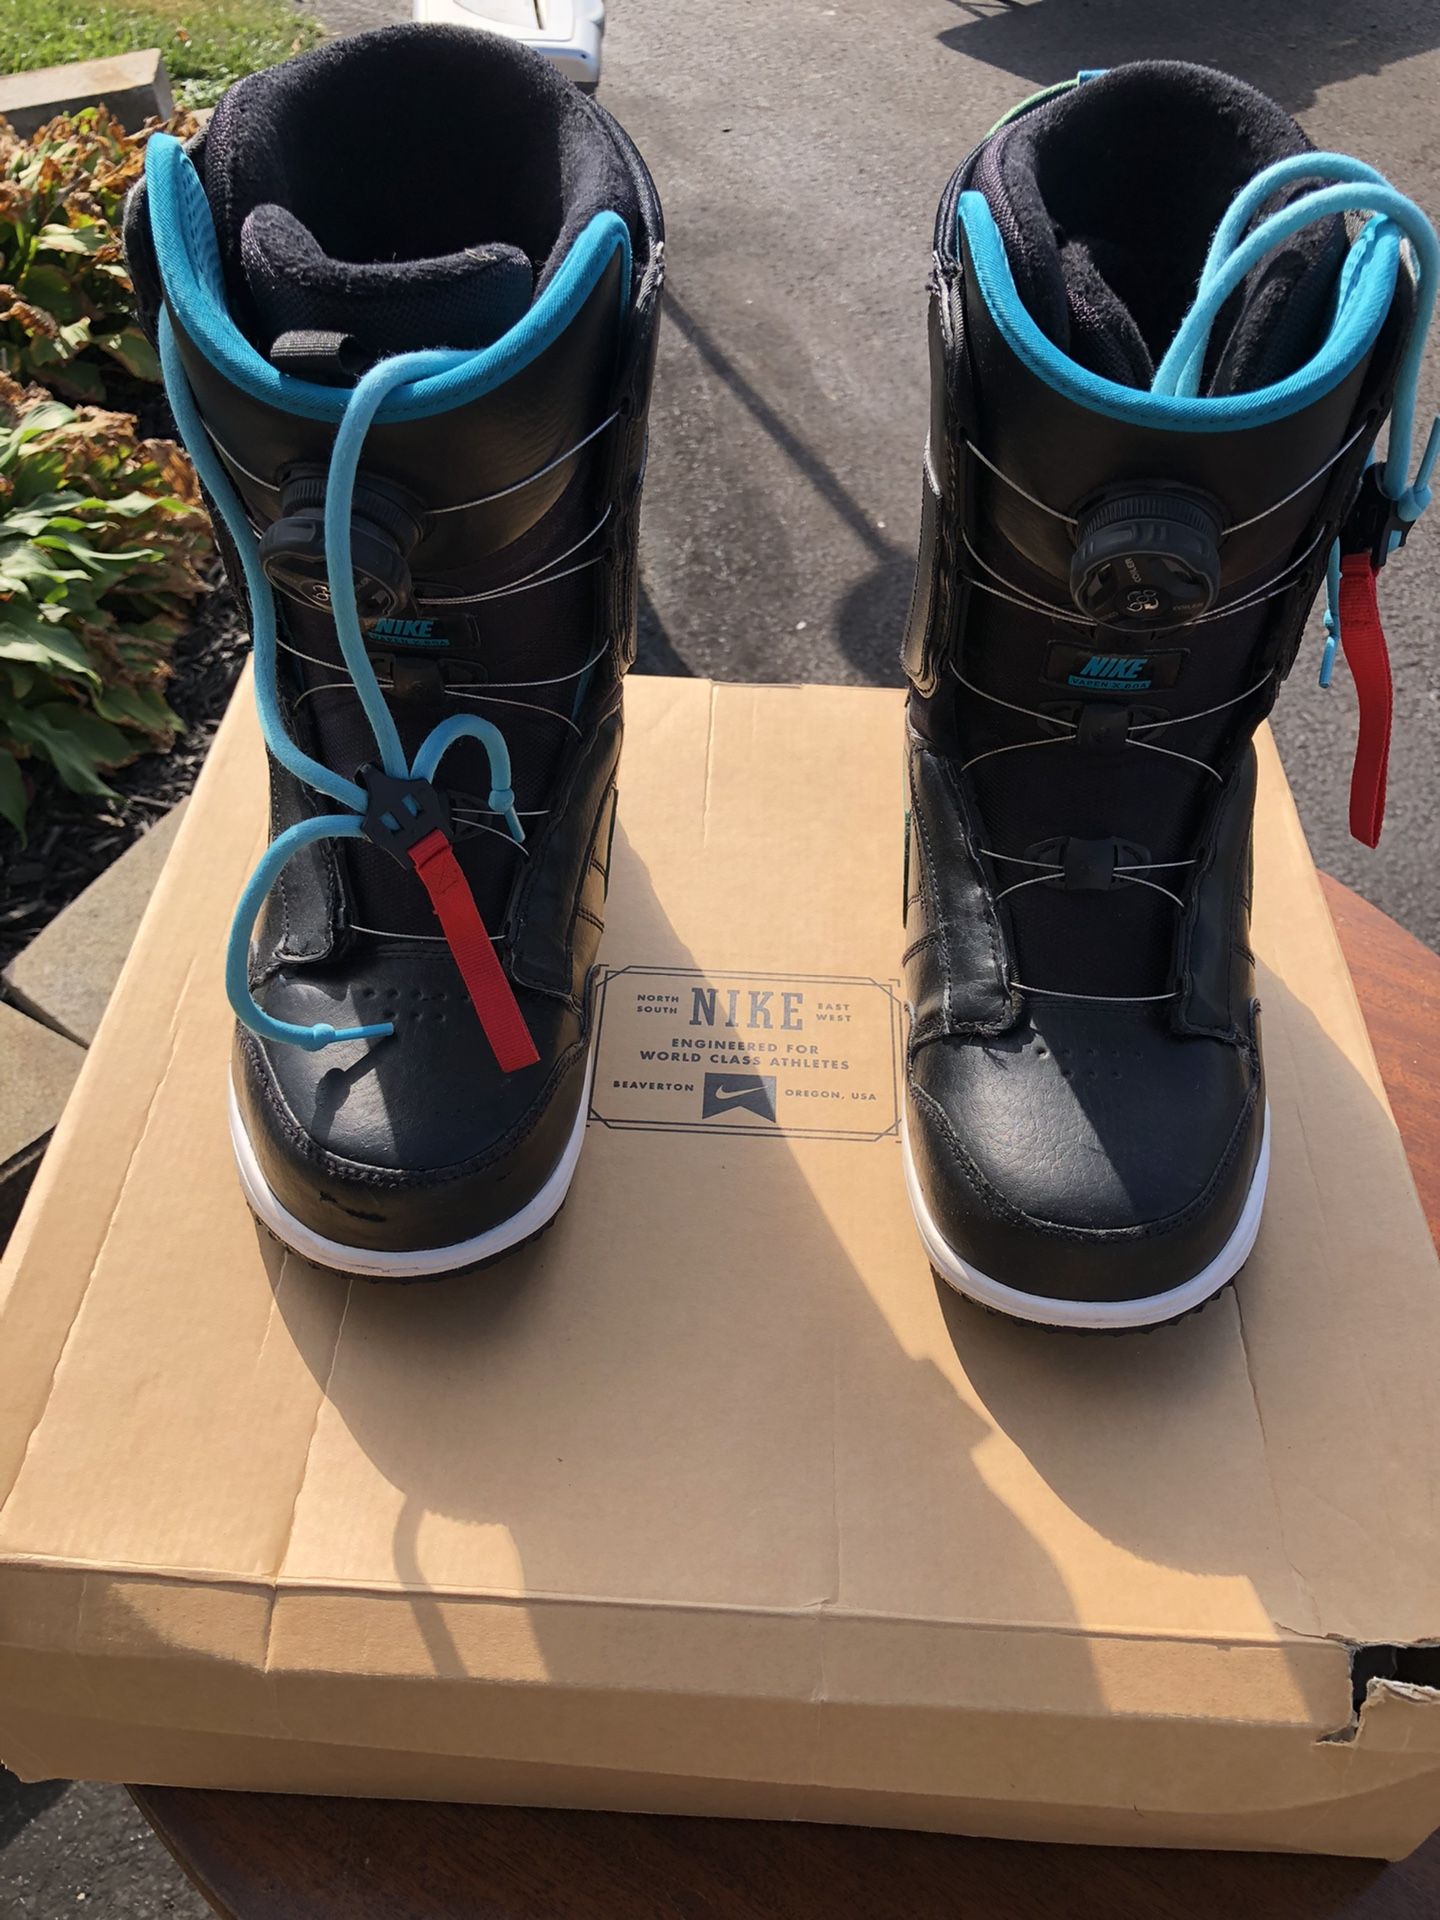 Nike Snowboarding Boots - Women’s Vapen X Boa Size 8 - $125